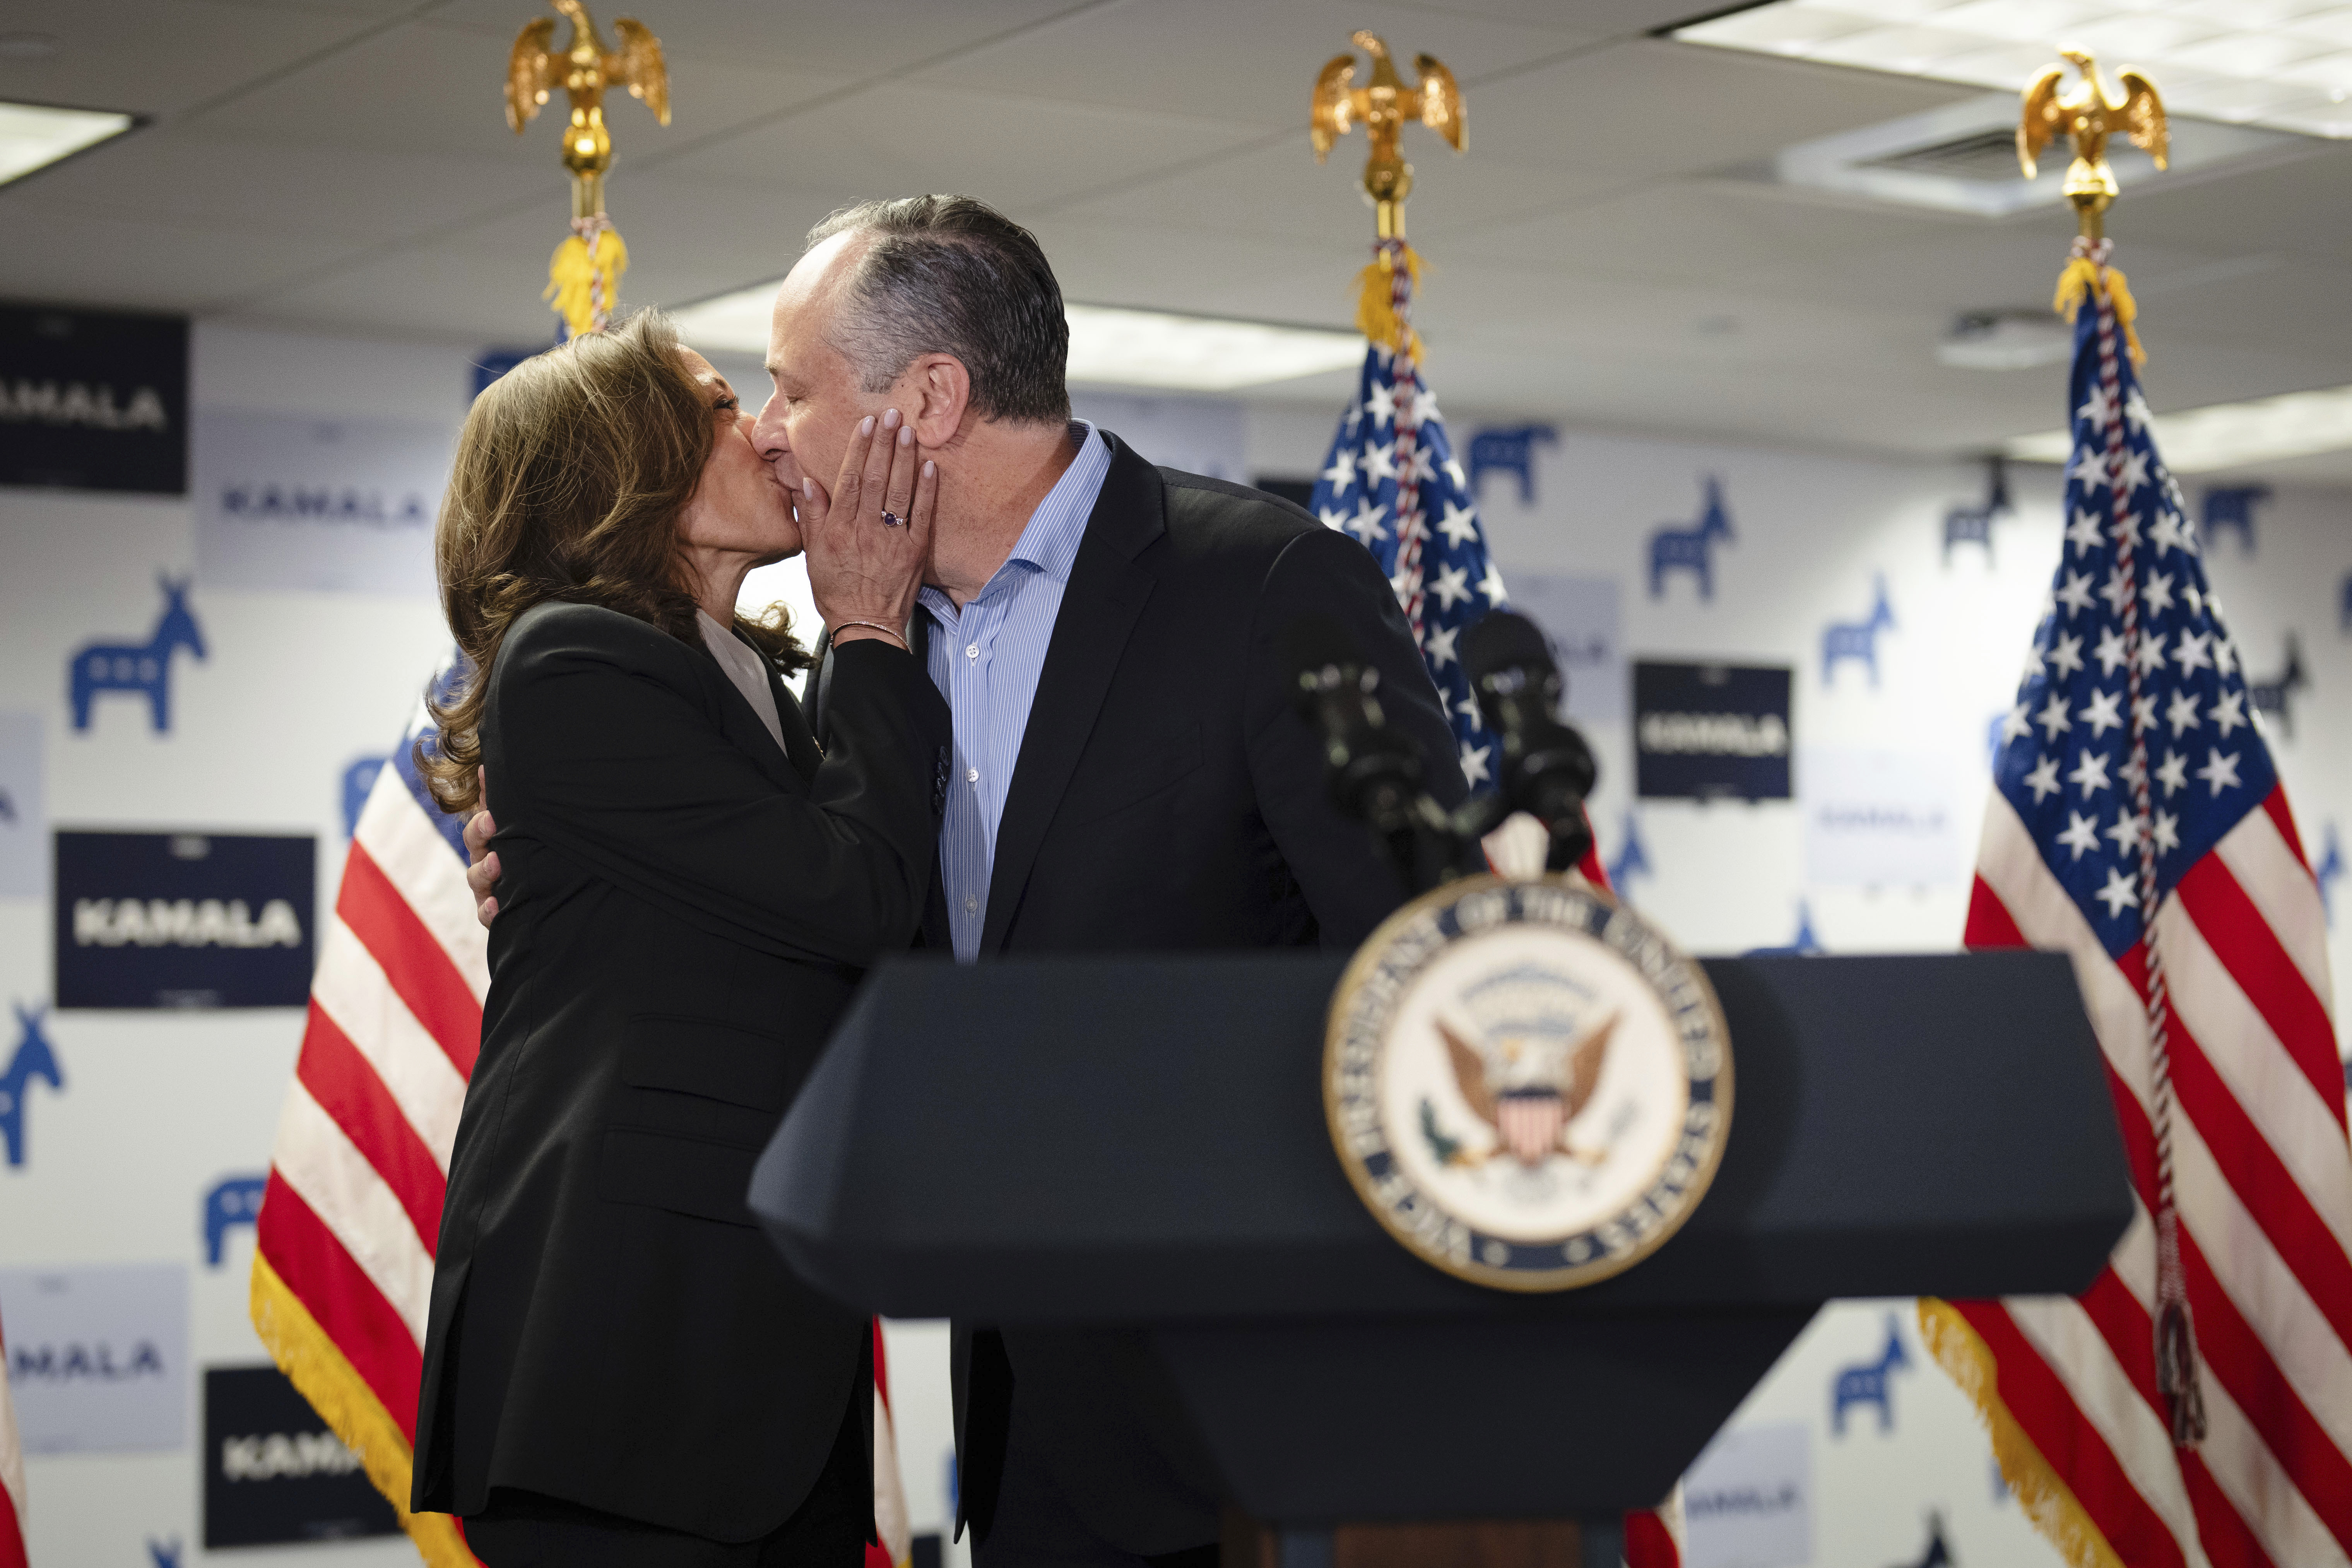 Vice President Kamala Harris kissing husband Doug Emhoff